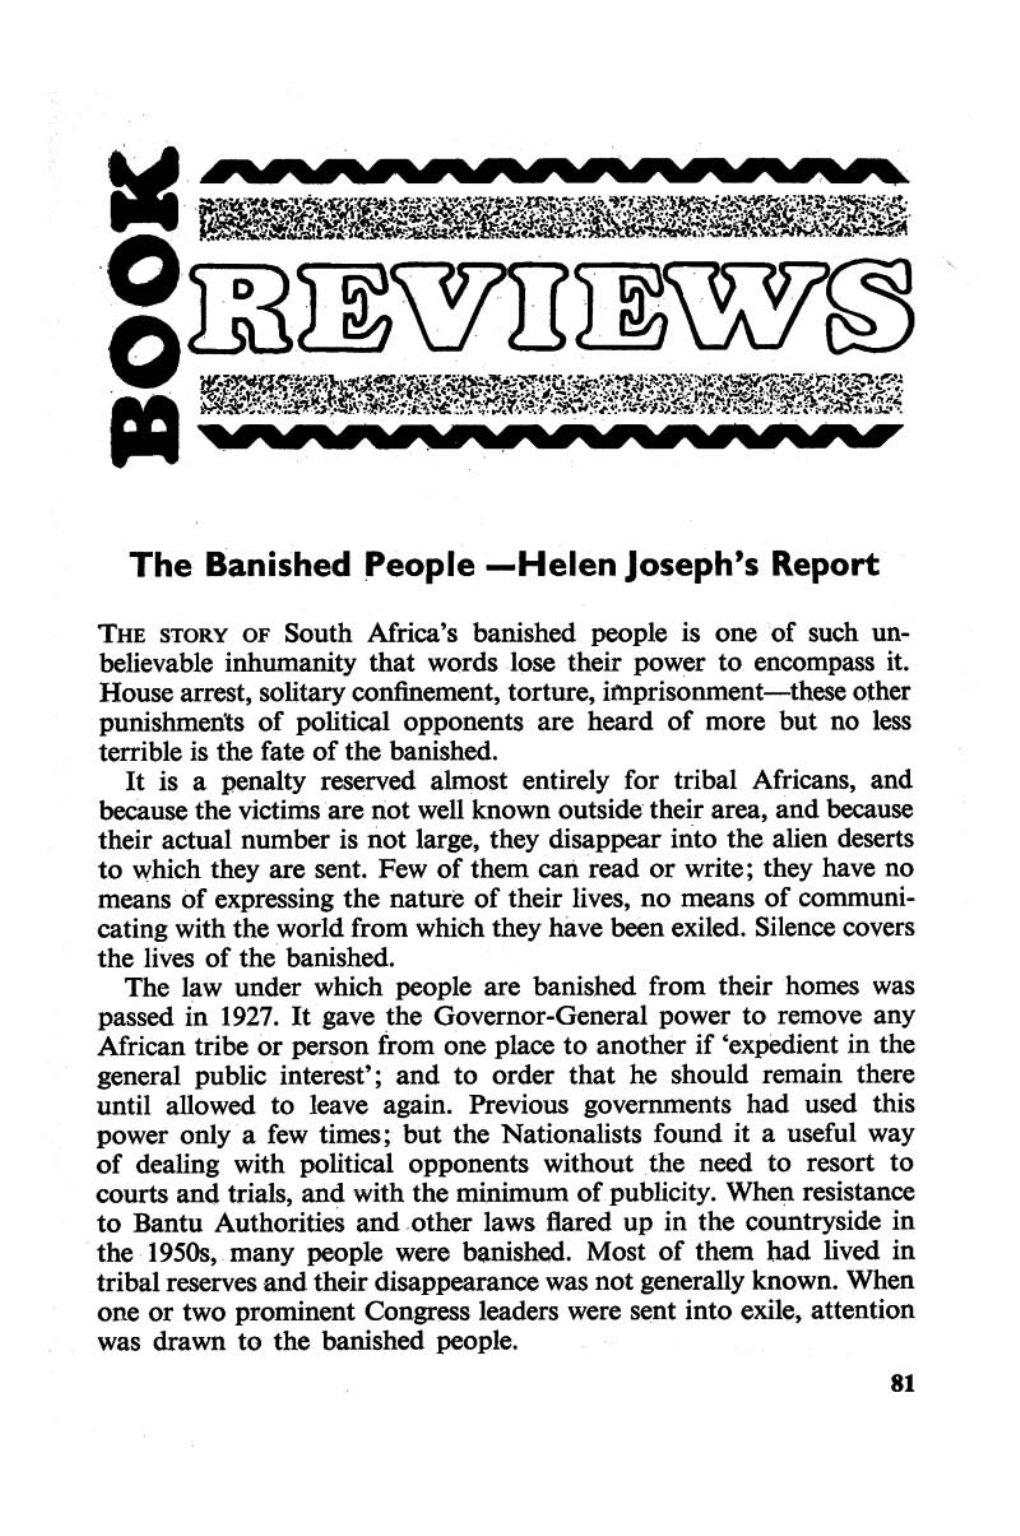 The Banished People -Helen Joseph's Report